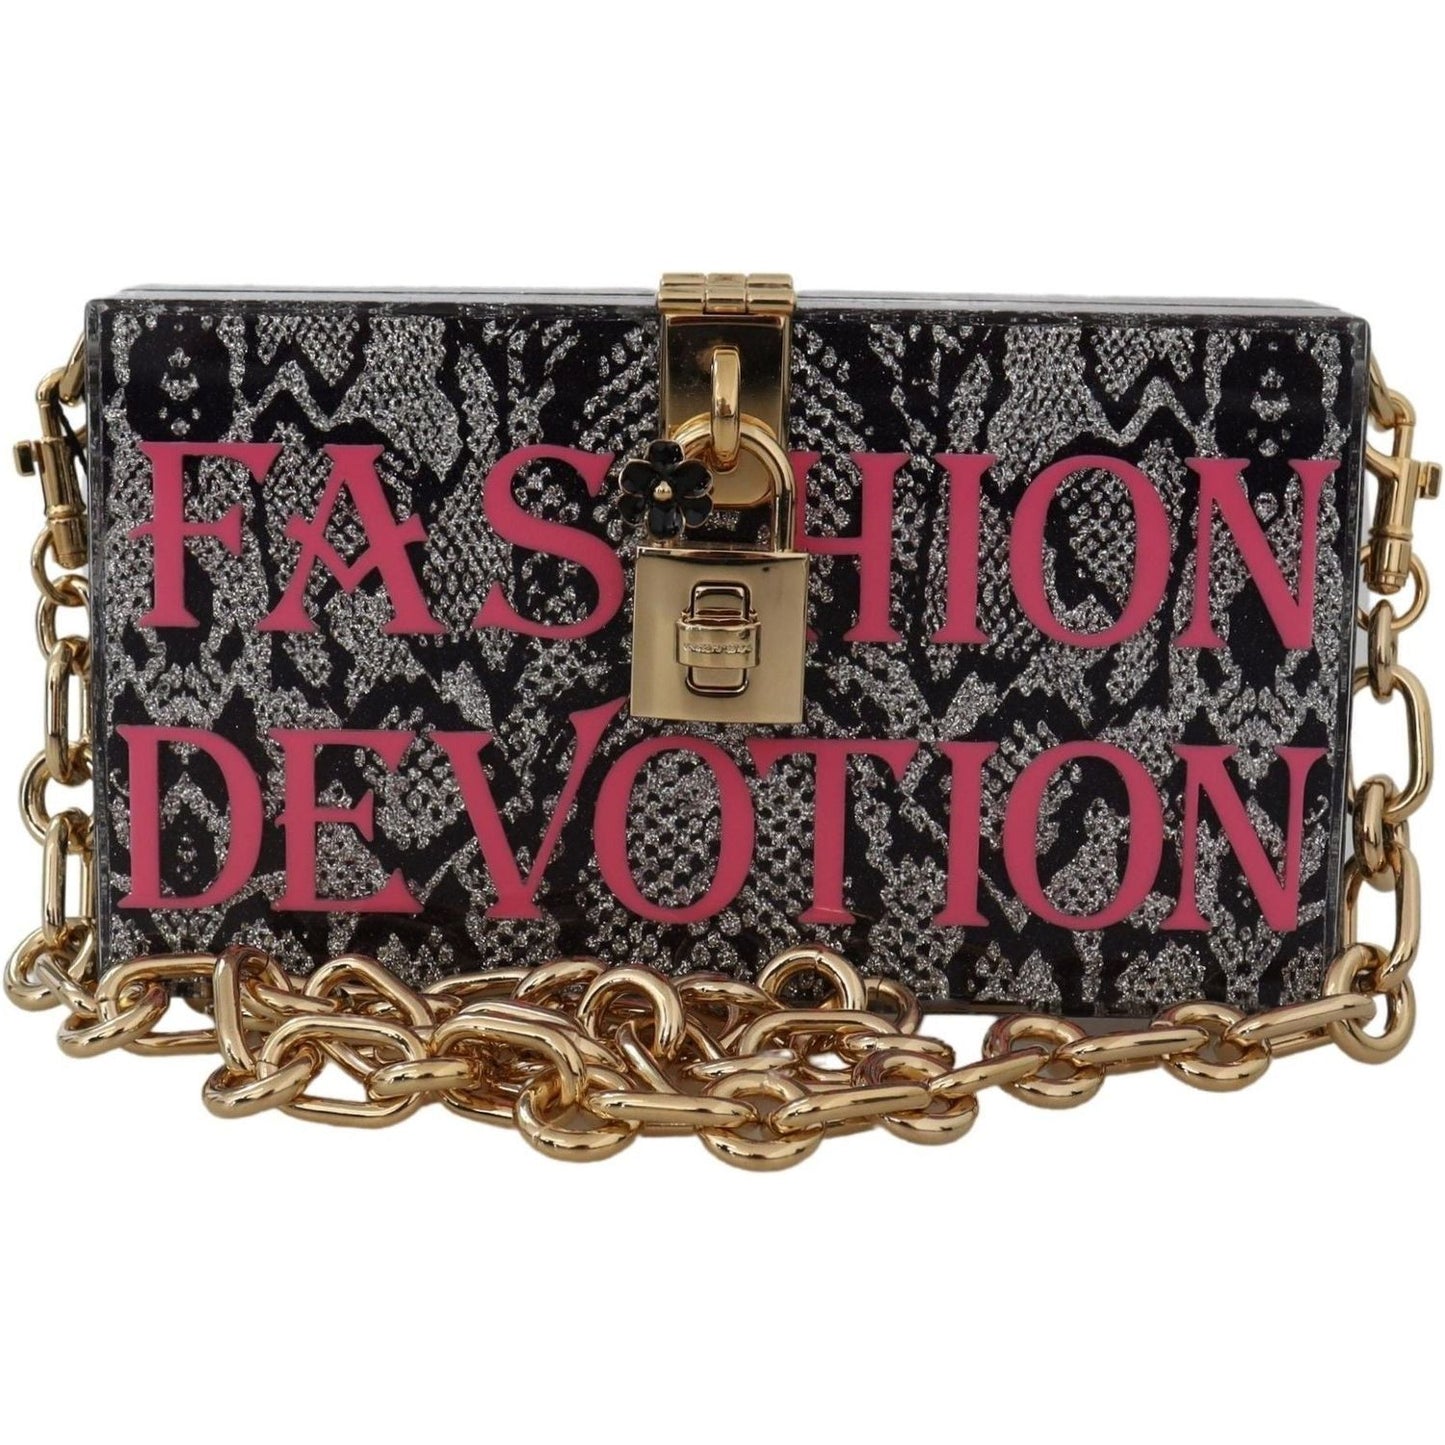 Dolce & GabbanaGray Resin Dolce Box Clutch with Gold DetailsMcRichard Designer Brands£1409.00